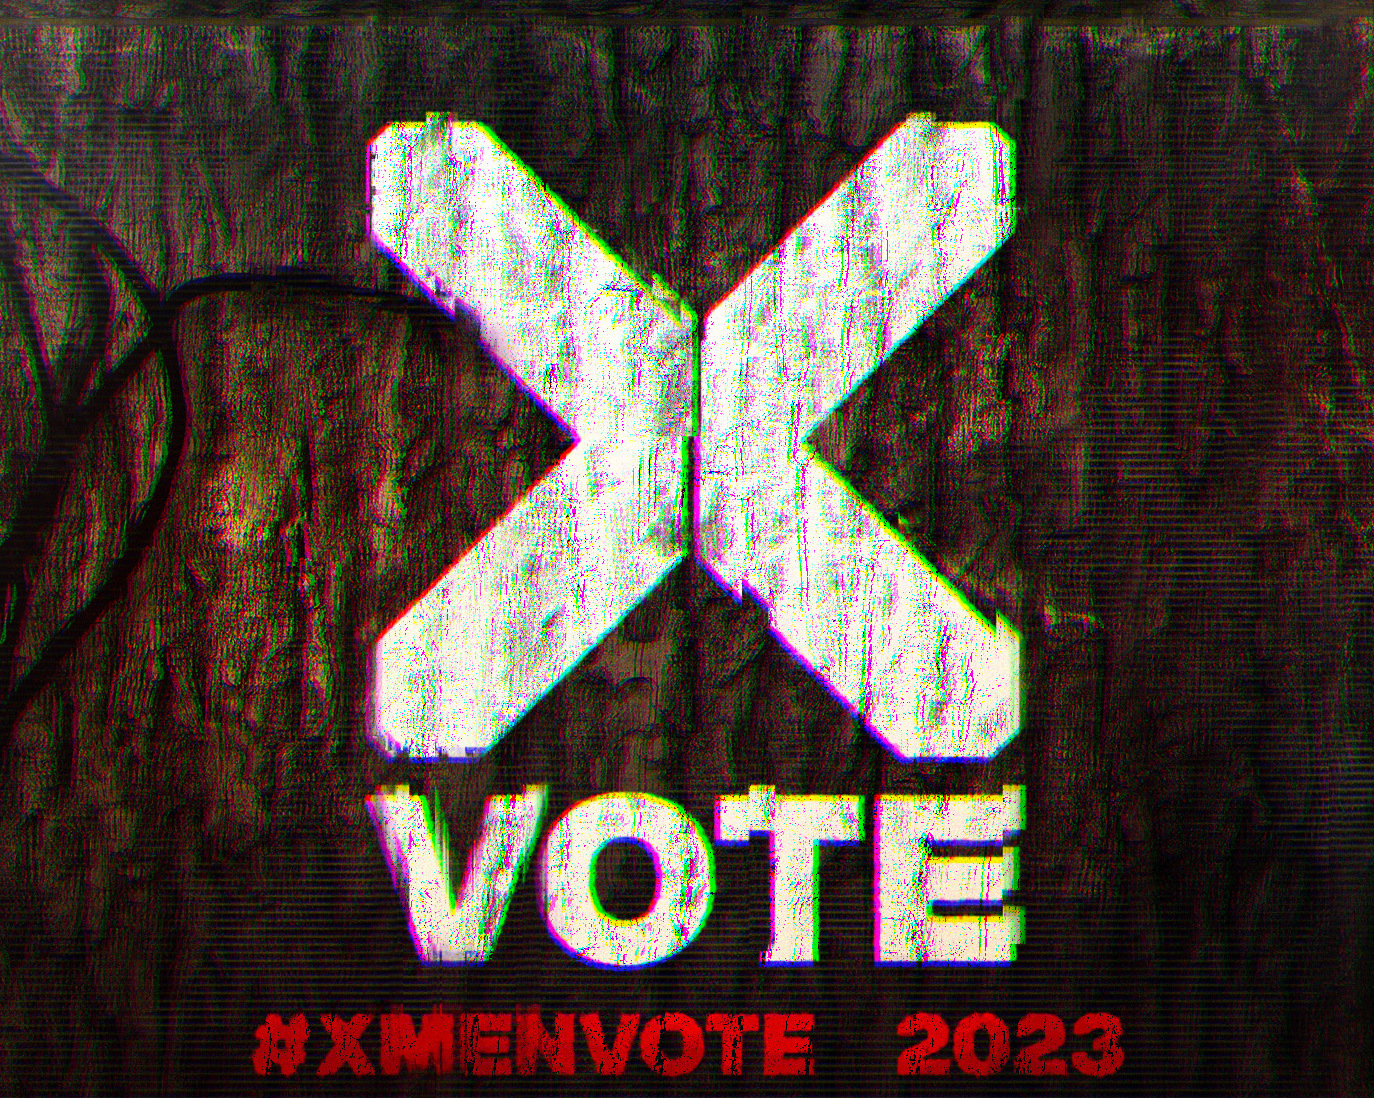 New 2023 #XMenVote announced to decide future X-Men team lineup